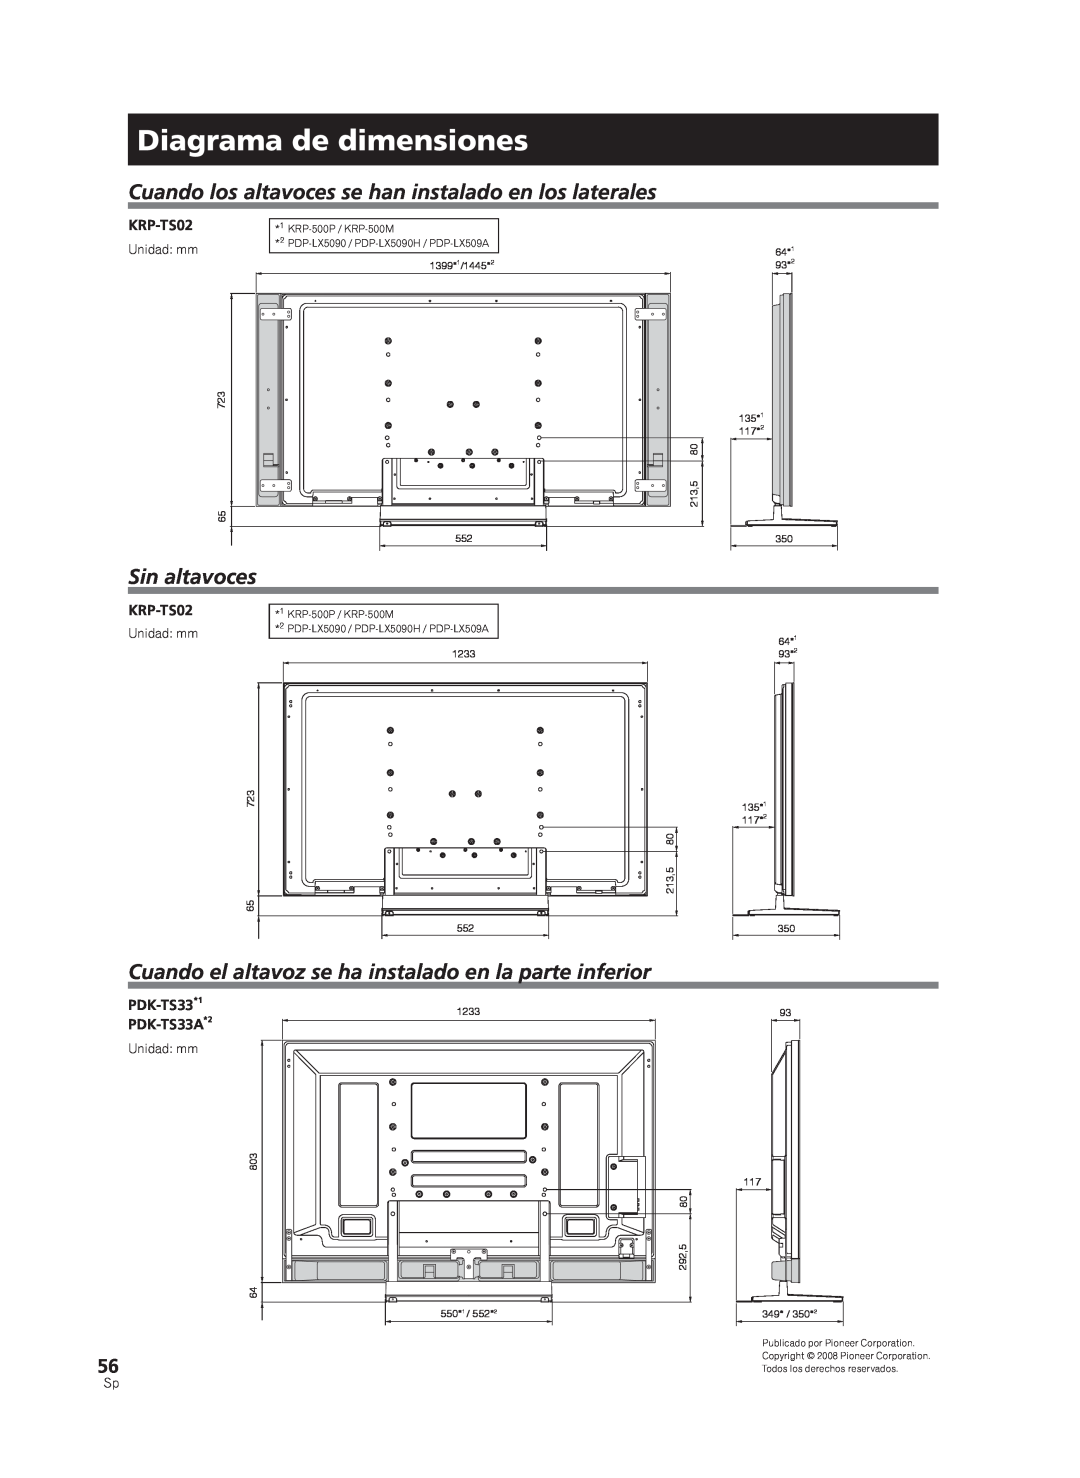 Pioneer KRP-TS02, PDK-TS33A manual Diagrama de dimensiones, Sin altavoces 